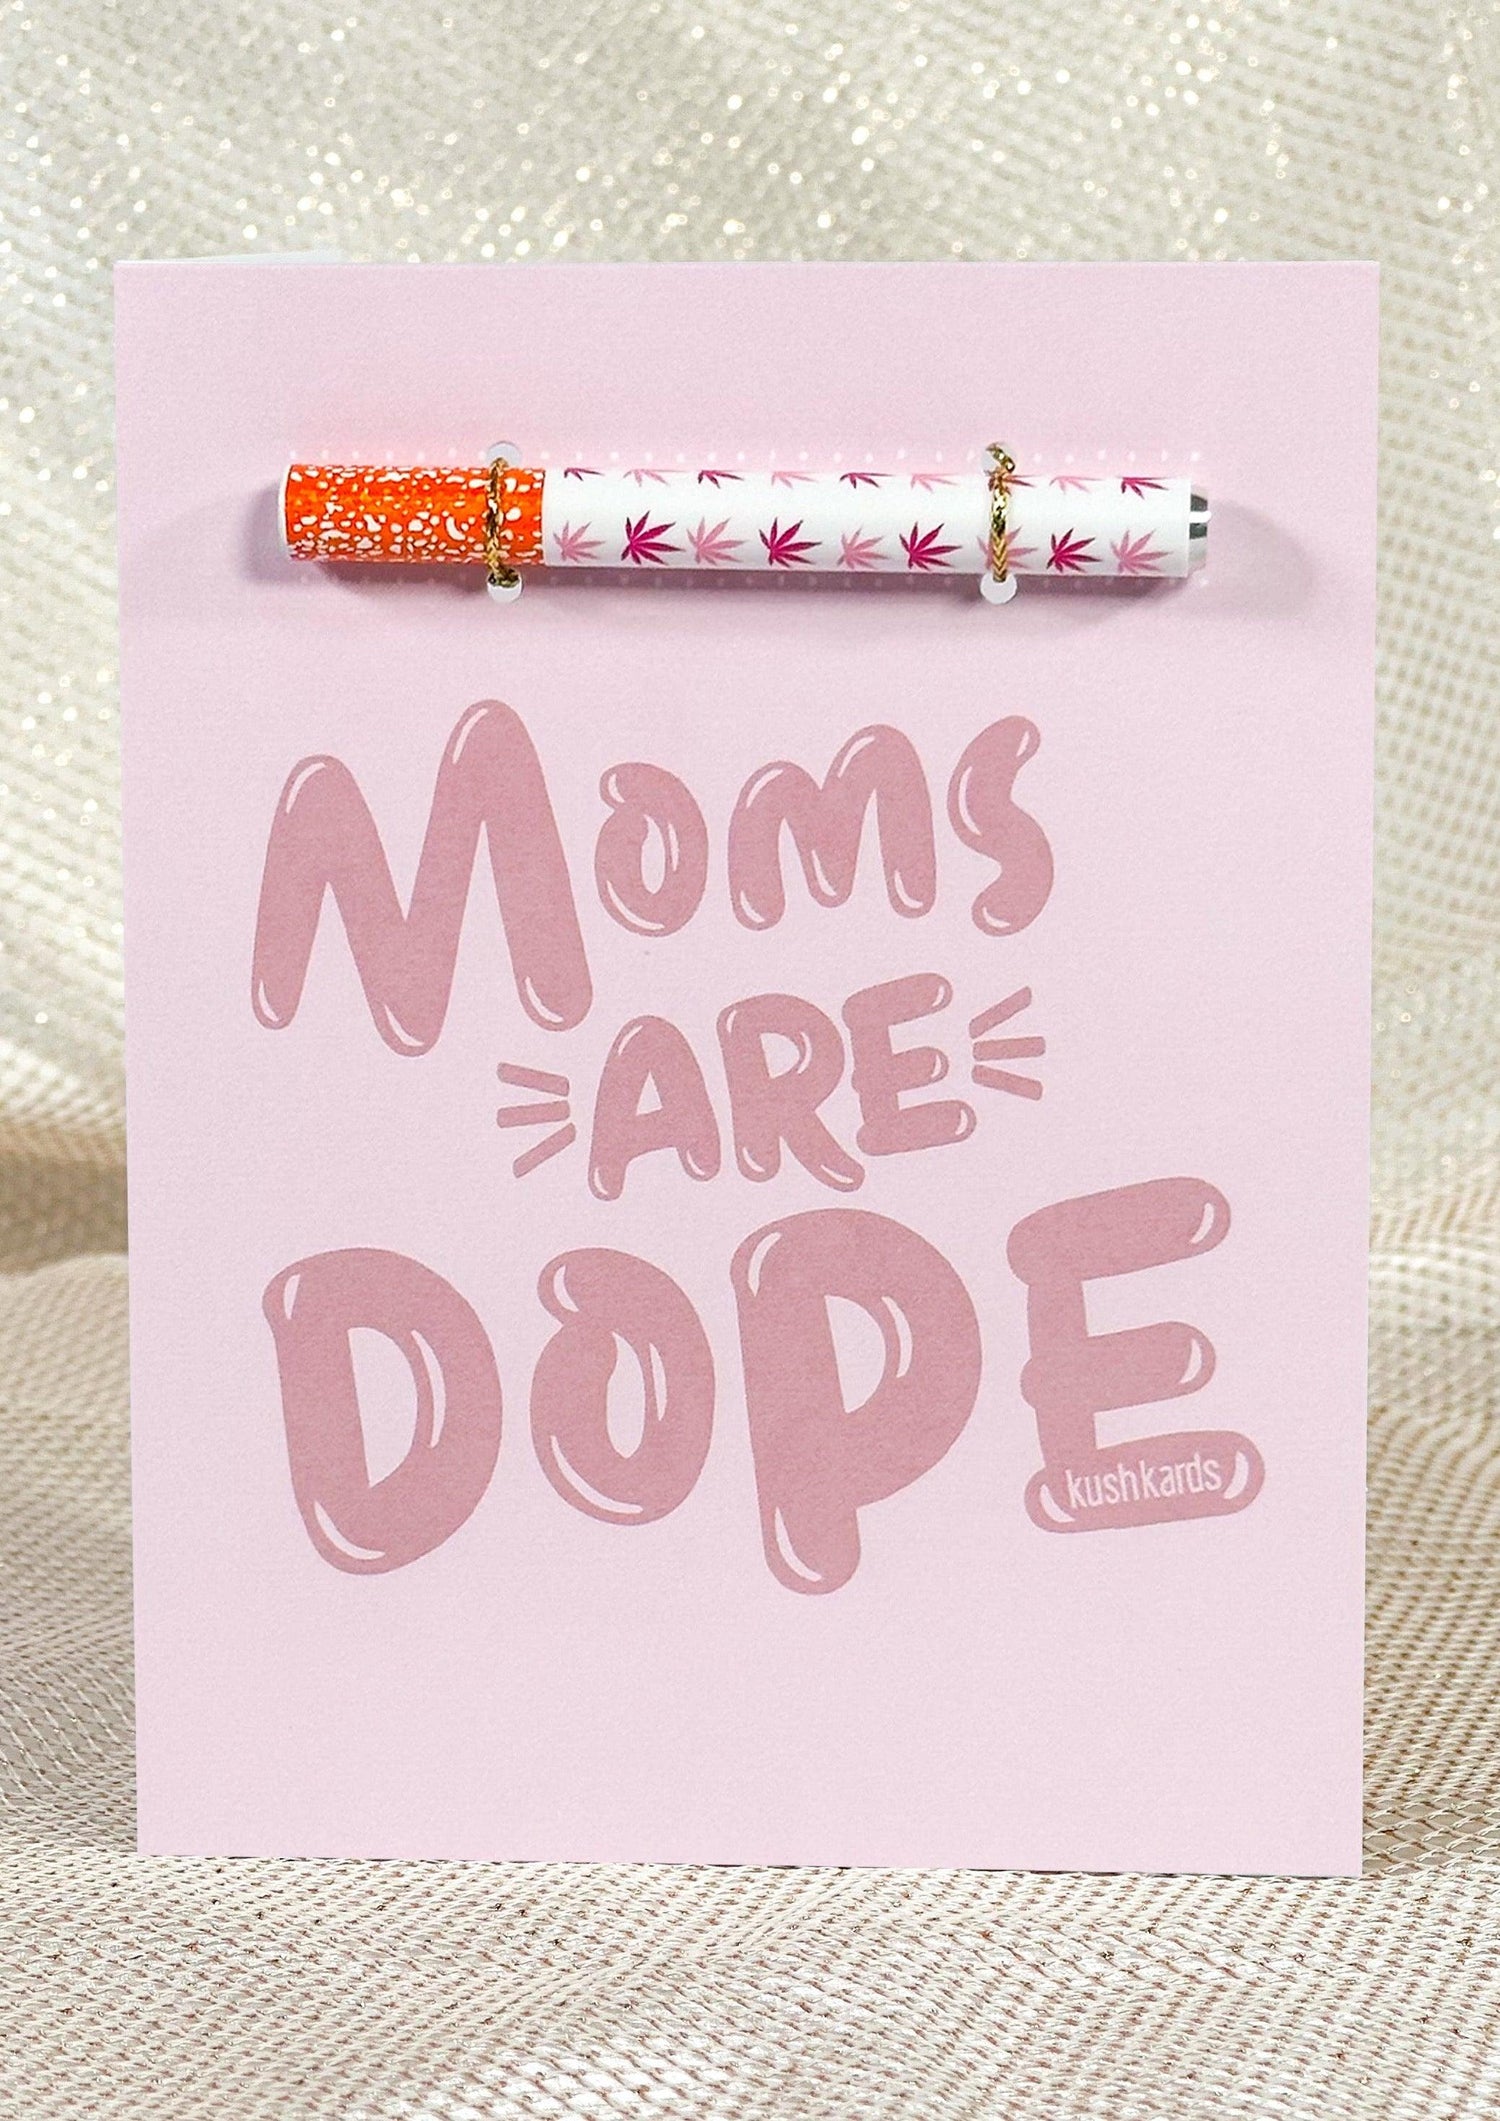 💕 Dope Mom Cannabis Greeting Card - KushKards